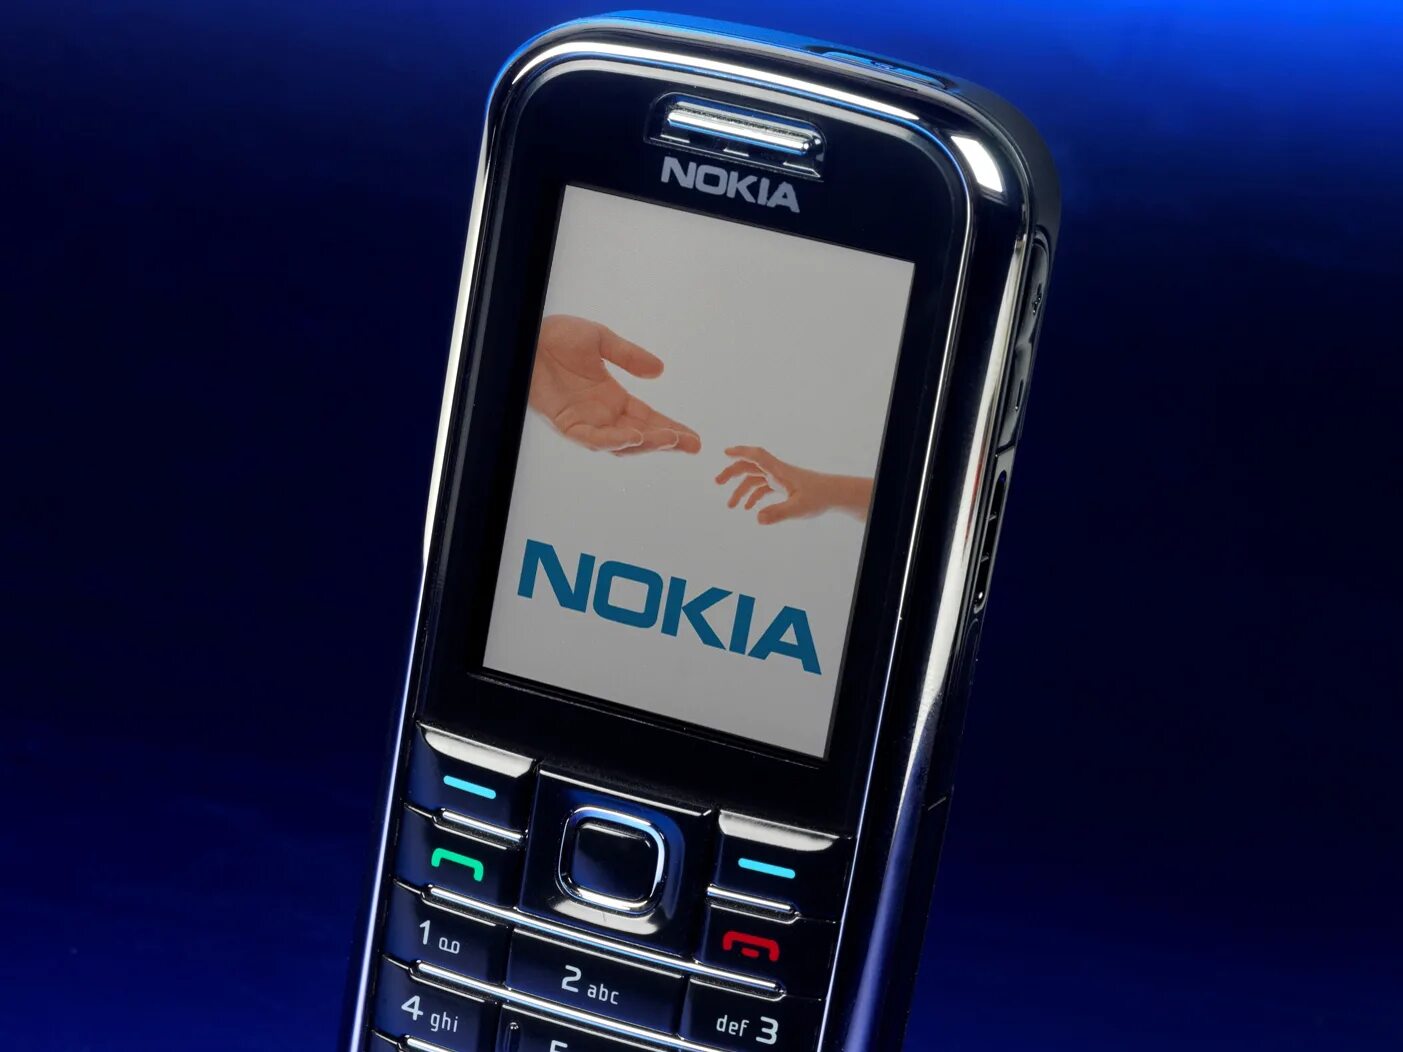 Nokia 6233 Classic. Nokia 6233 XPRESSMUSIC. 6233 Nokia Nokia. Нокия 6233 Классик. Русский телефон нокиа